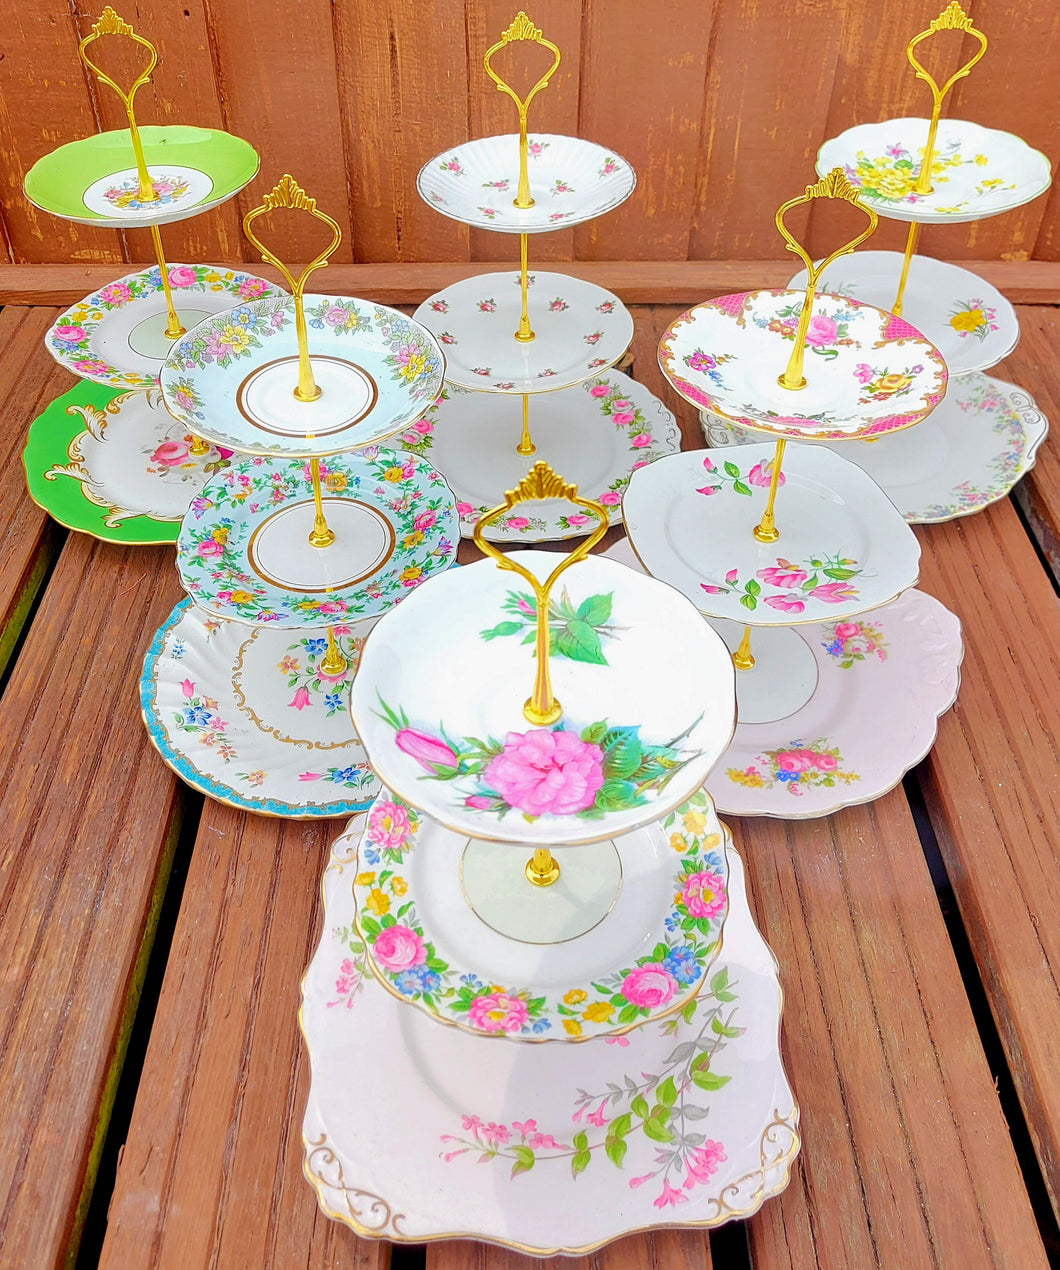 7 (21pcs) x Vintage 3 Tier Mismatched Floral Cake Stands, Afternoon Tea Party Wedding Crockery Bulk Plates Trays